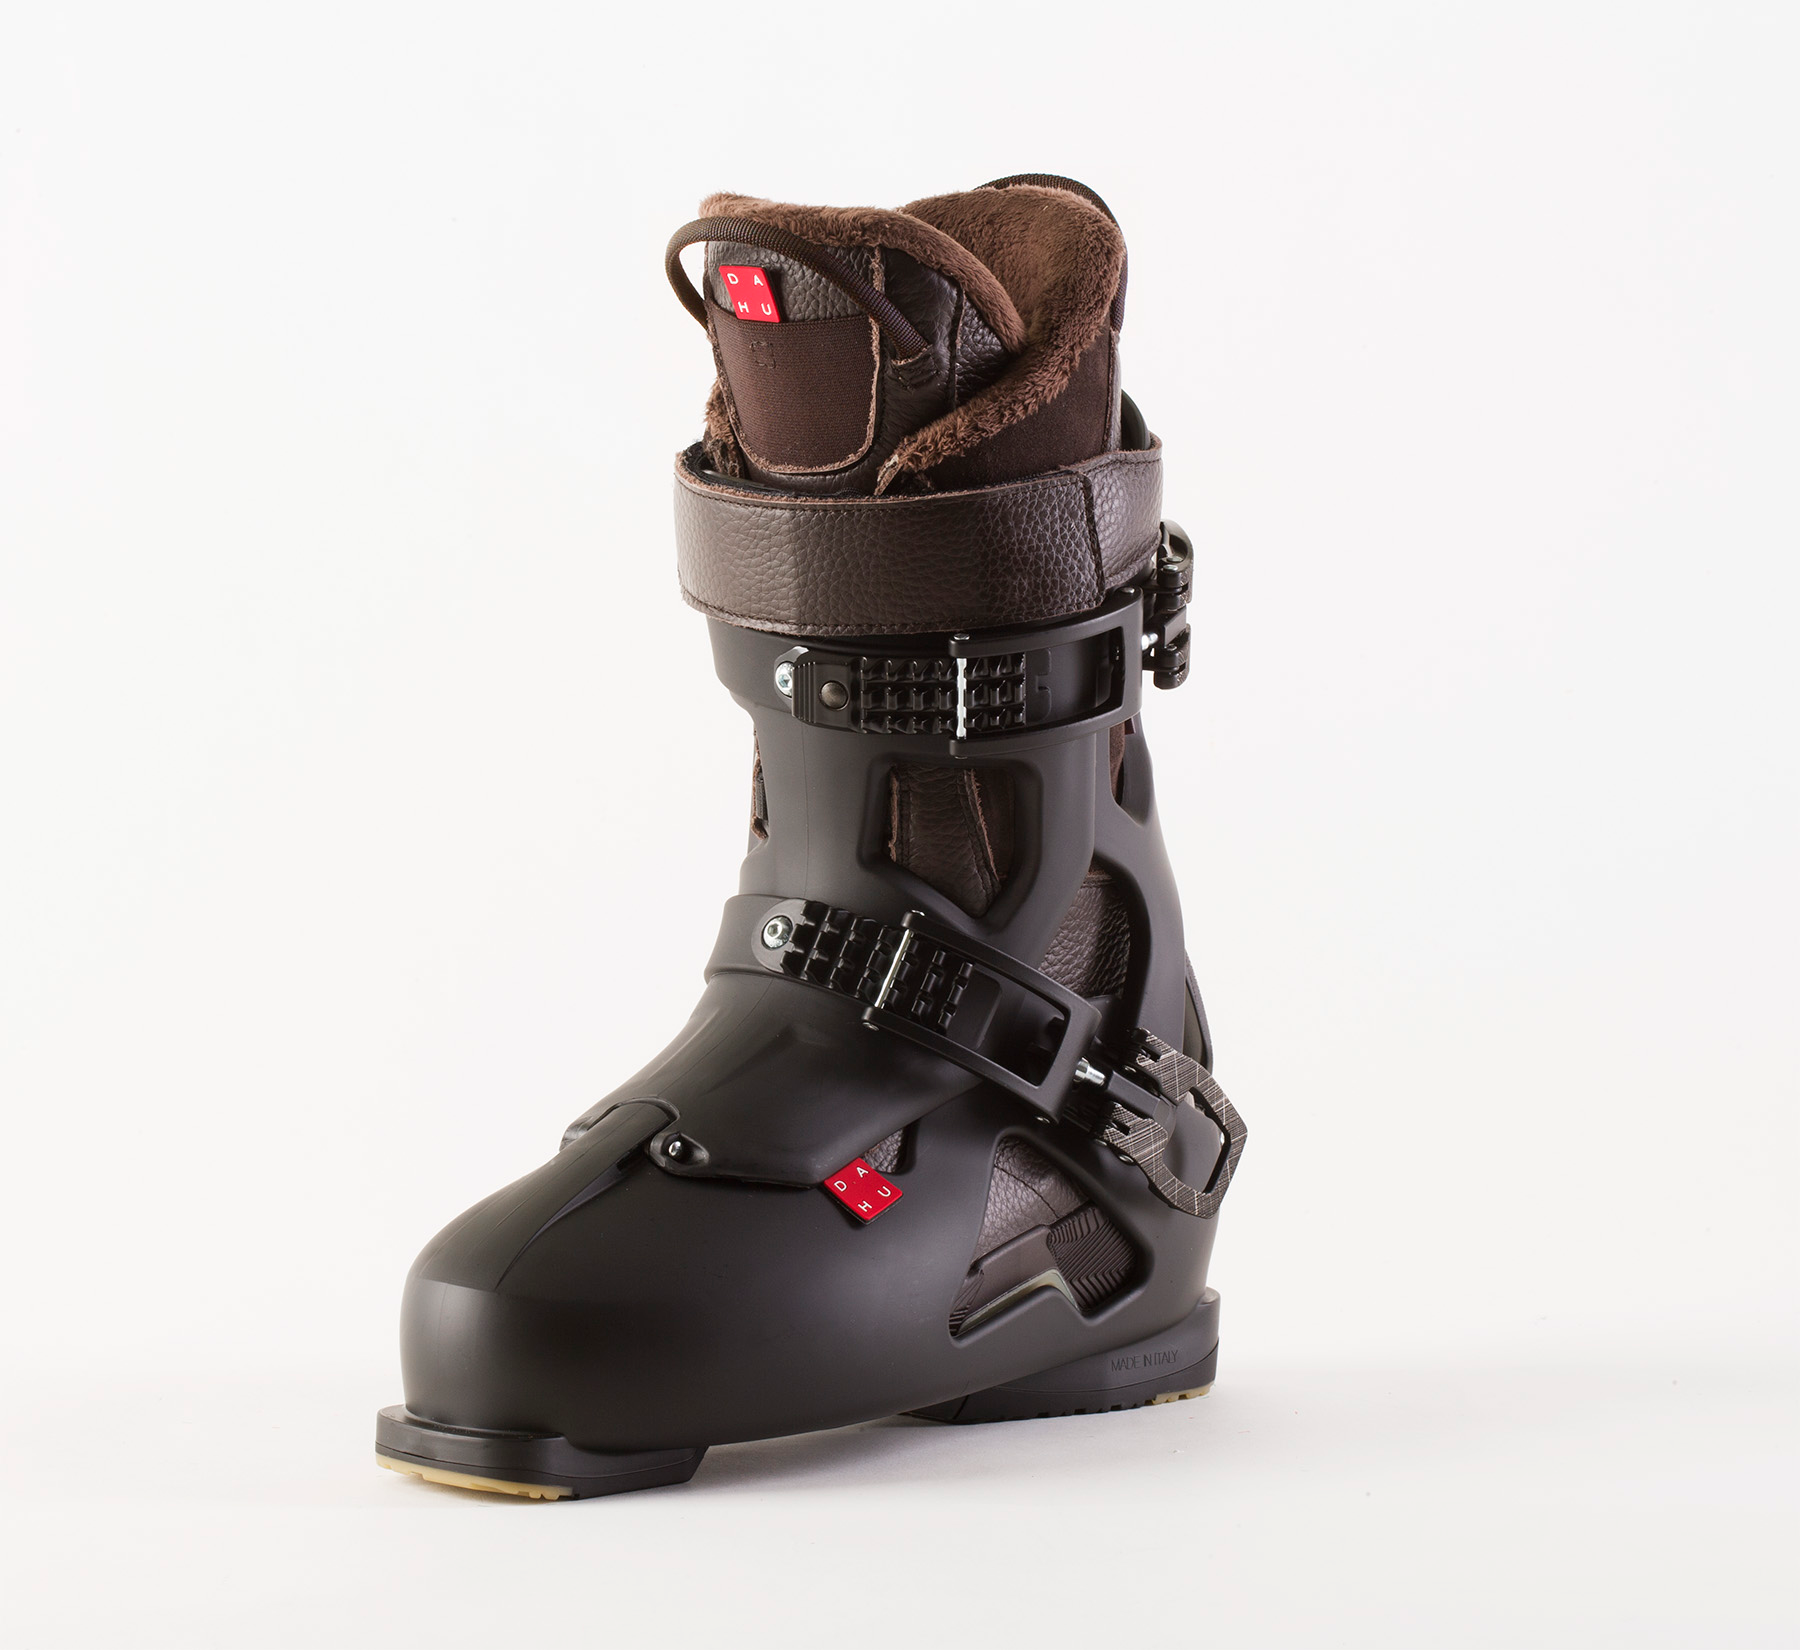 exoskeleton ski boots